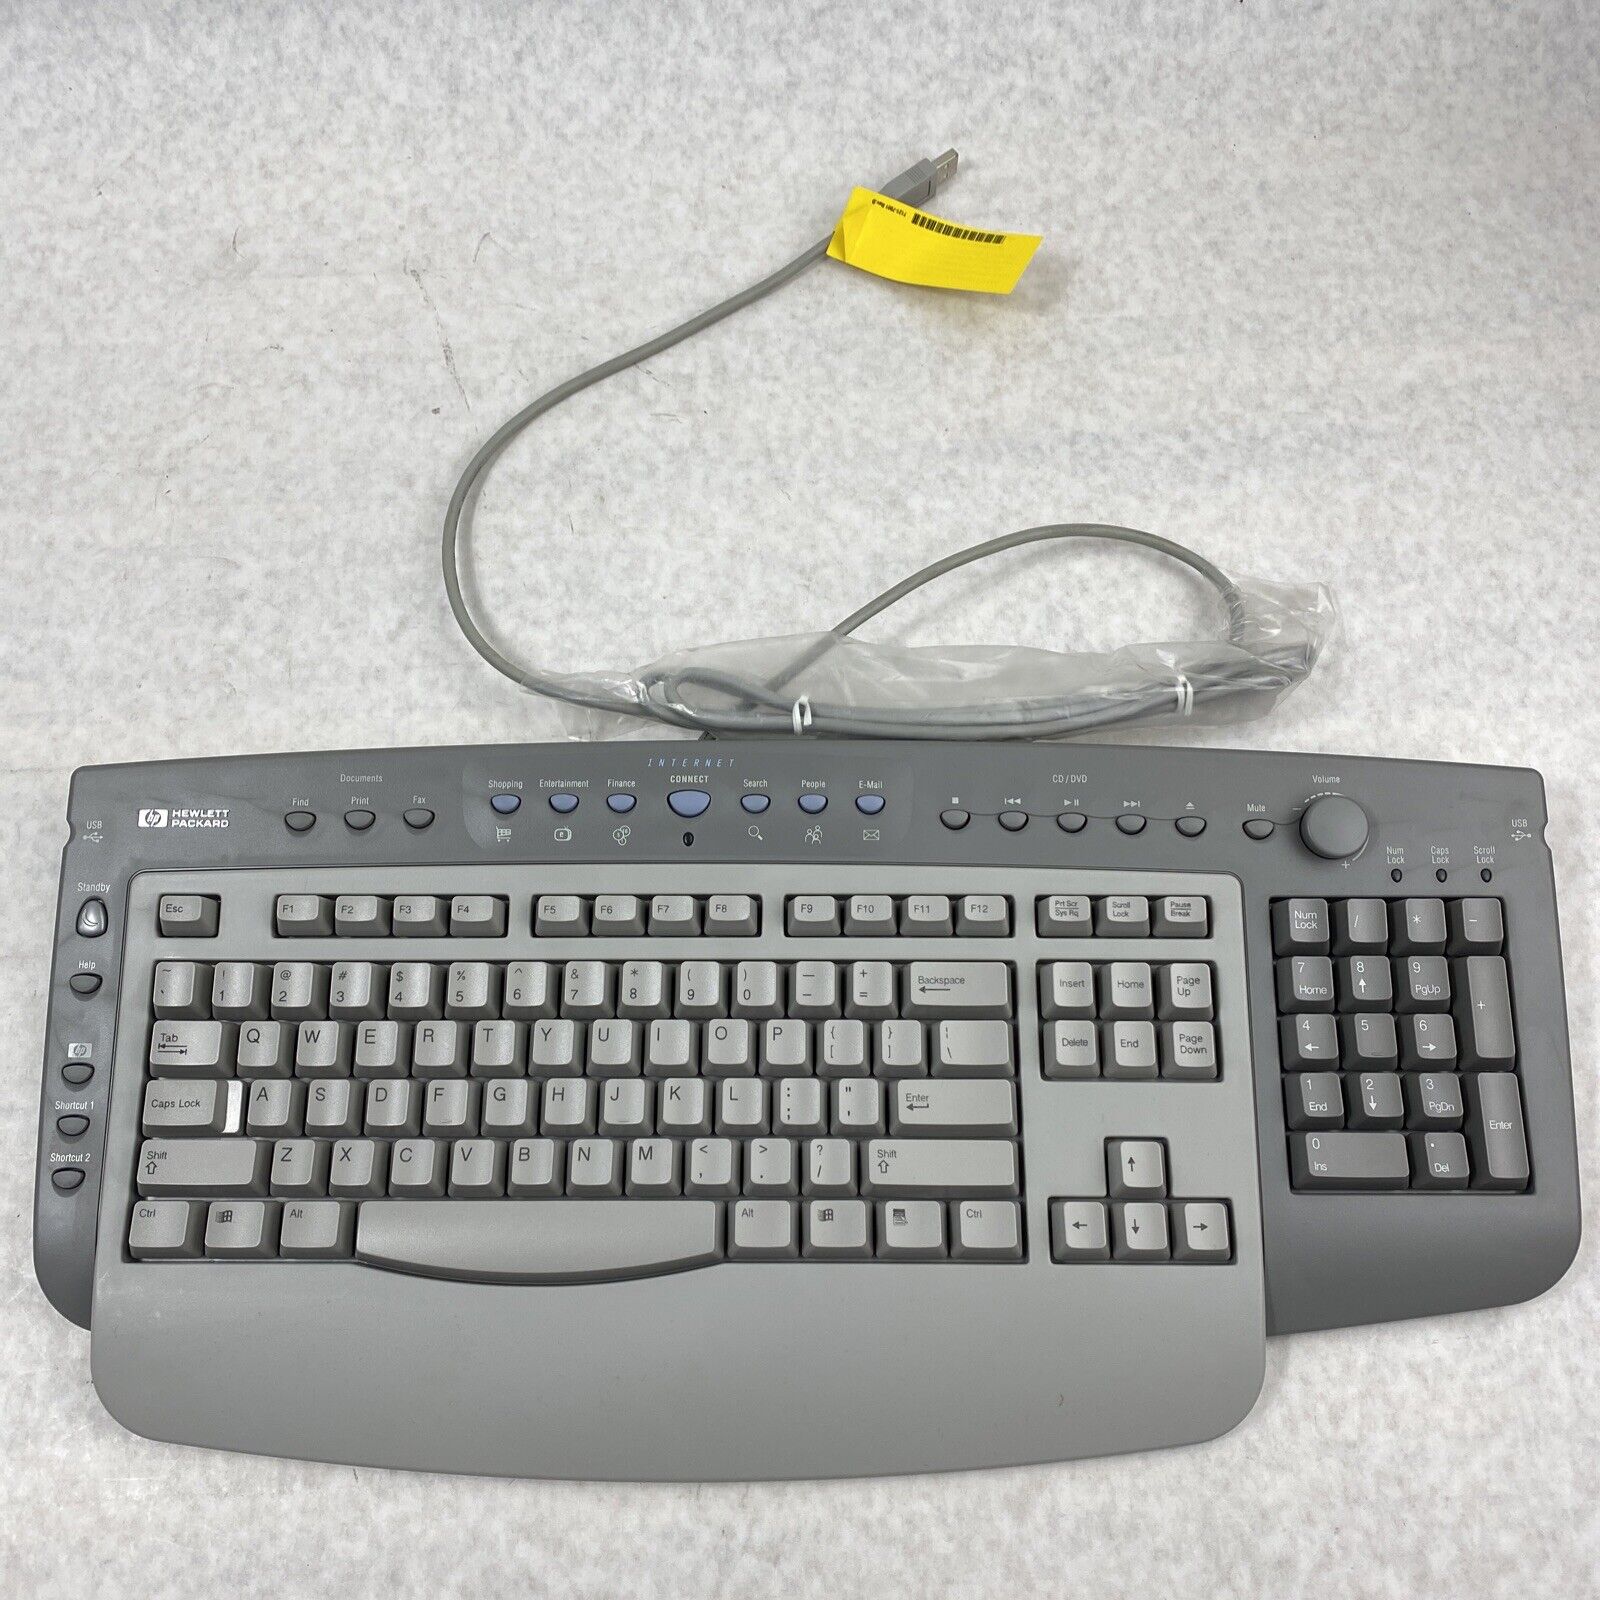 HP 5183-9960 Keyboard 6511-SU 105key Enhanced Key Volume Knob Wired USB Palmrest